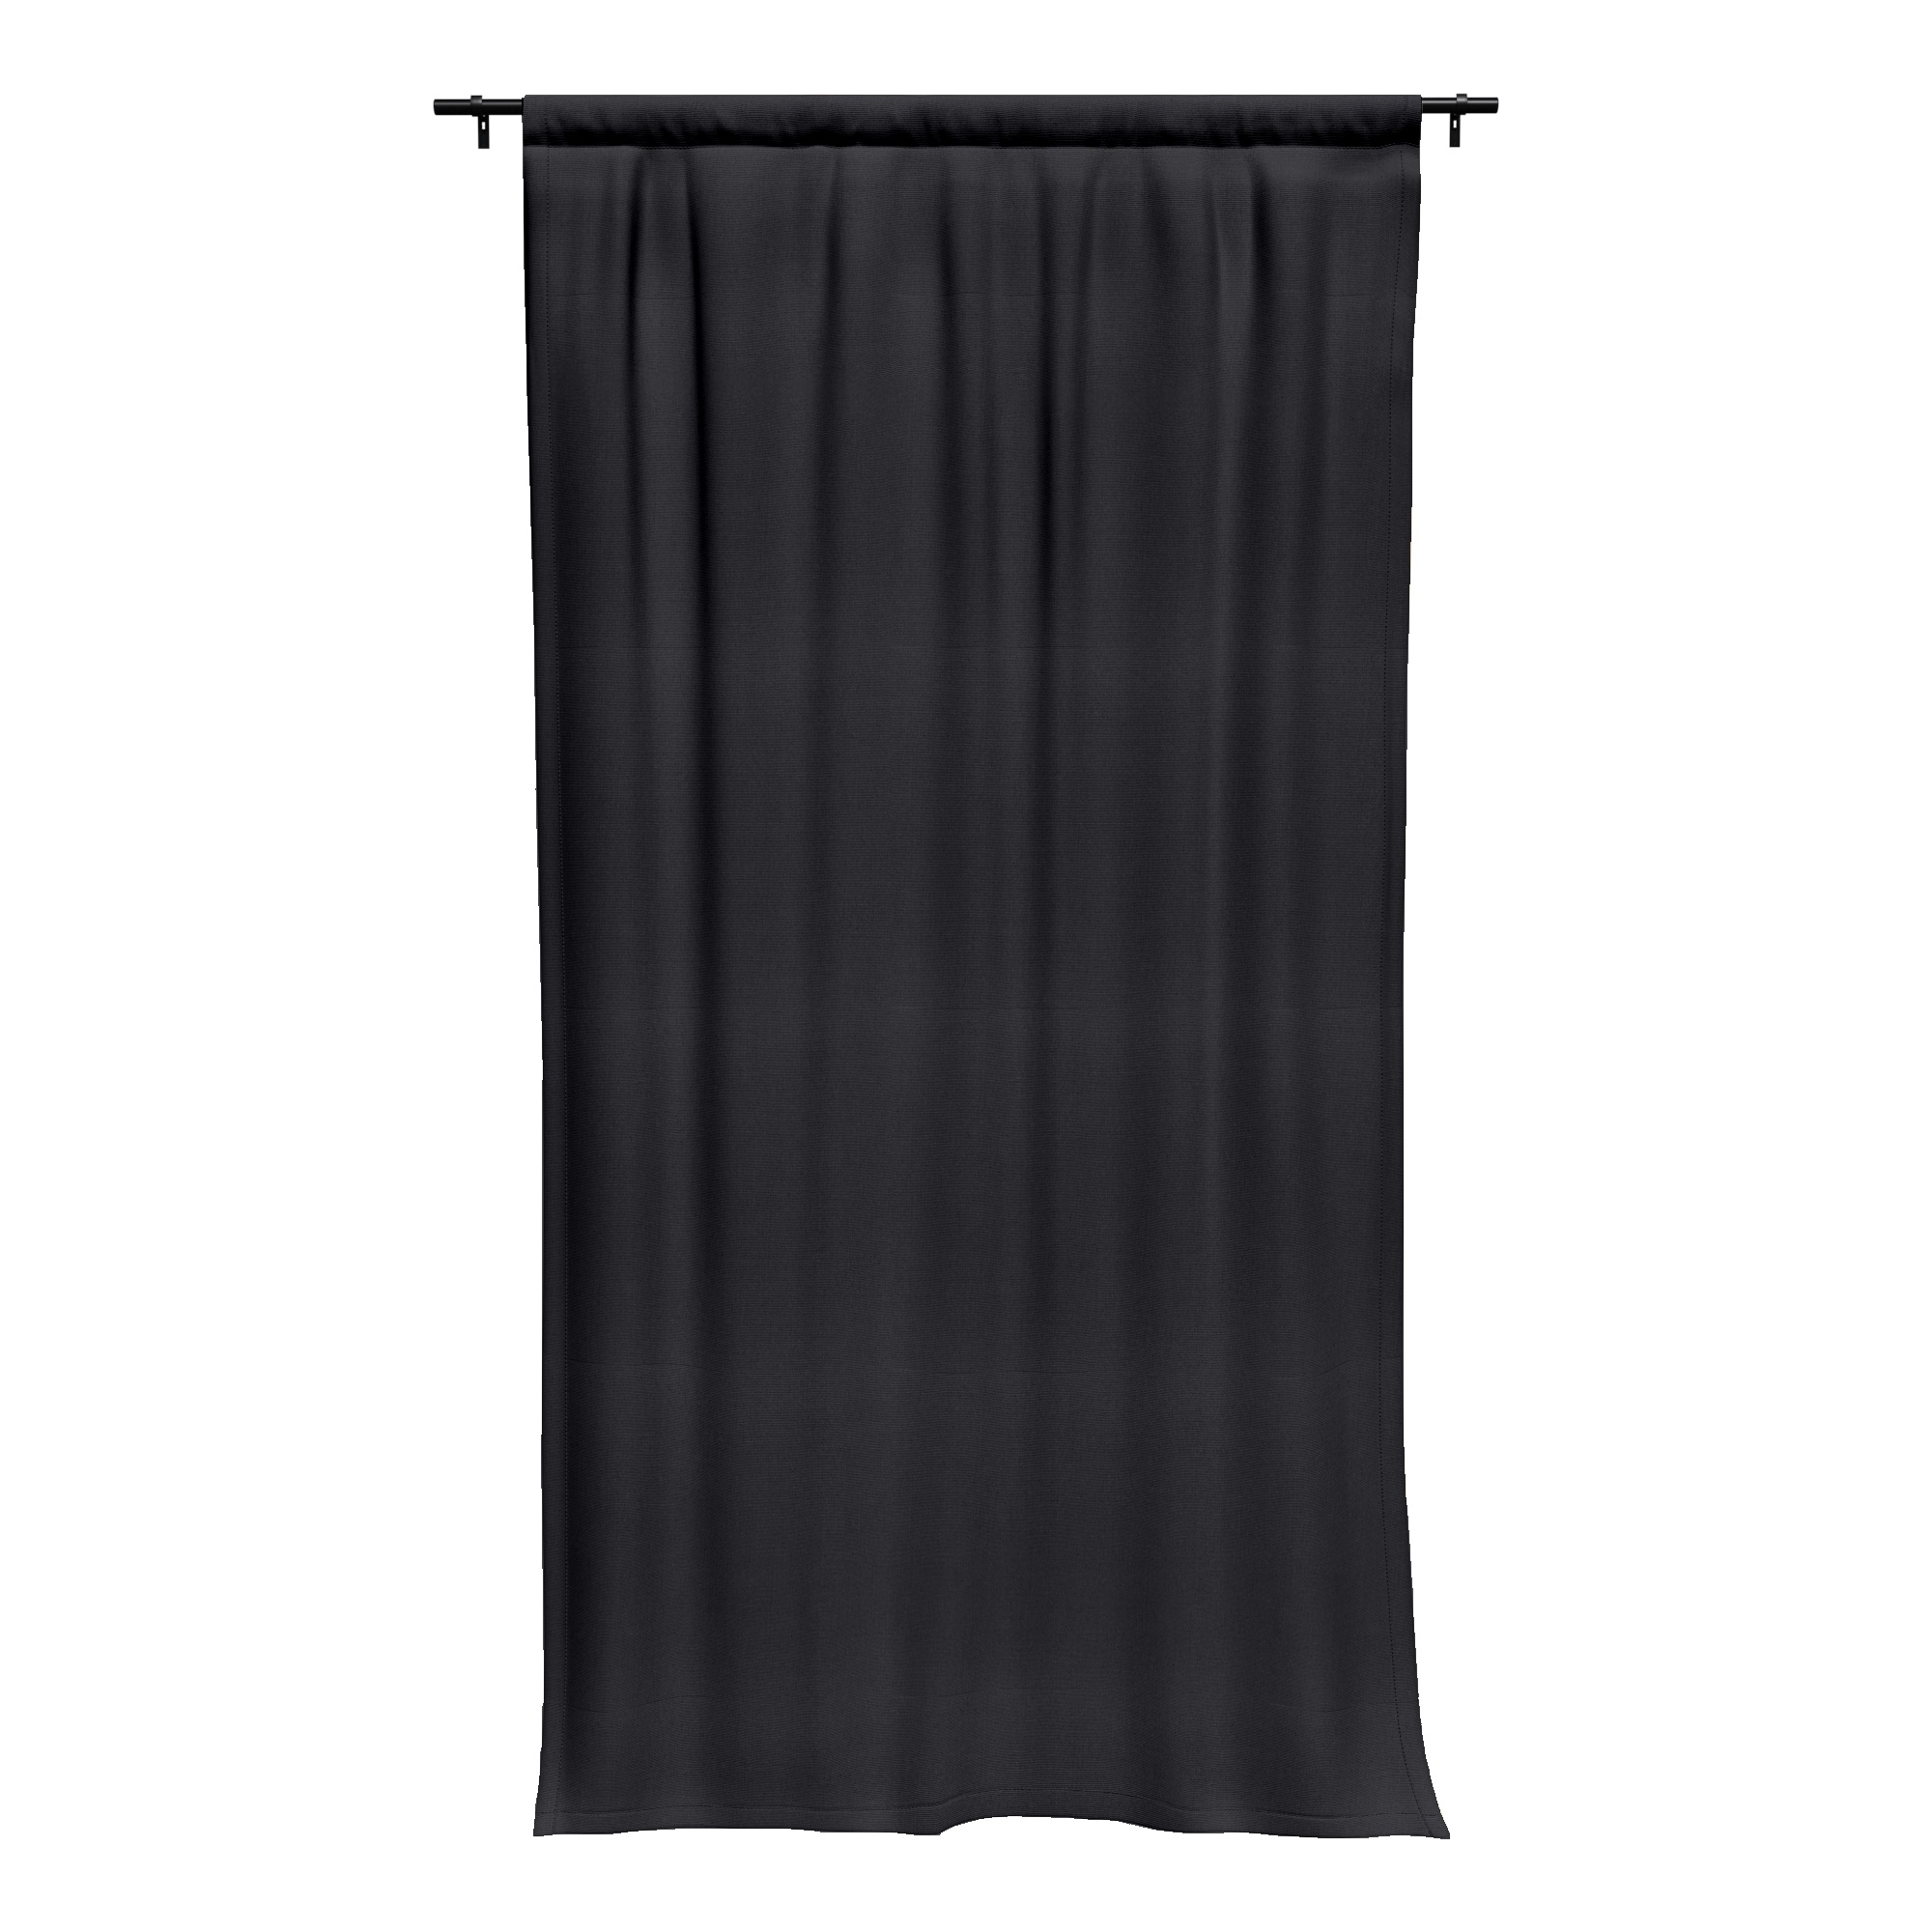 Sunbrella Canvas Flax Outdoor Curtain 50 in x 108 in w/ Dark